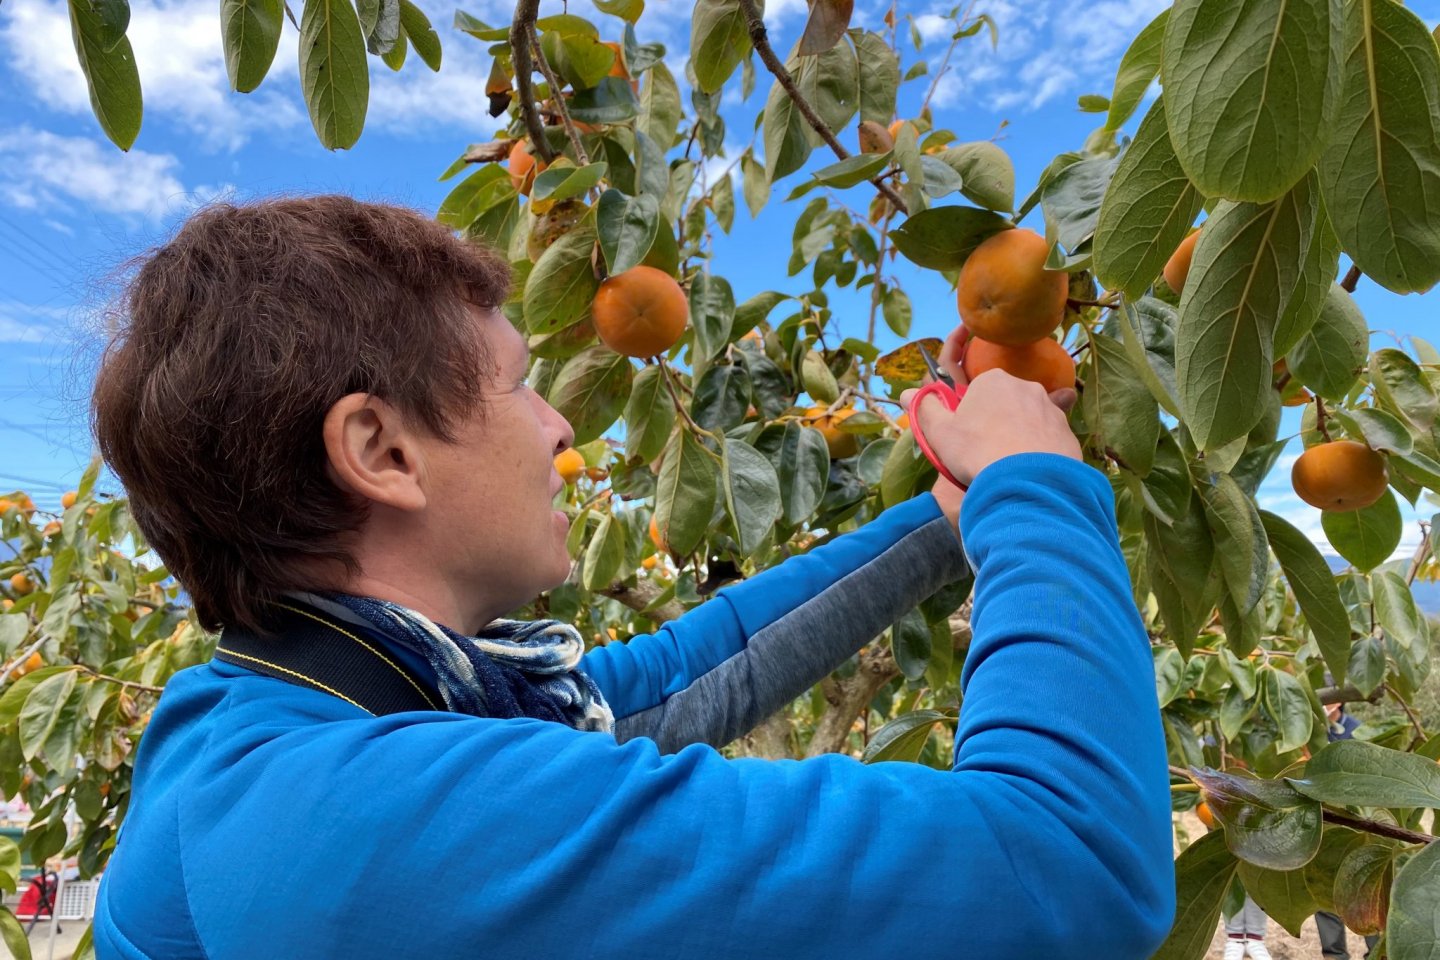 Picking persimmon is an autumn activity.